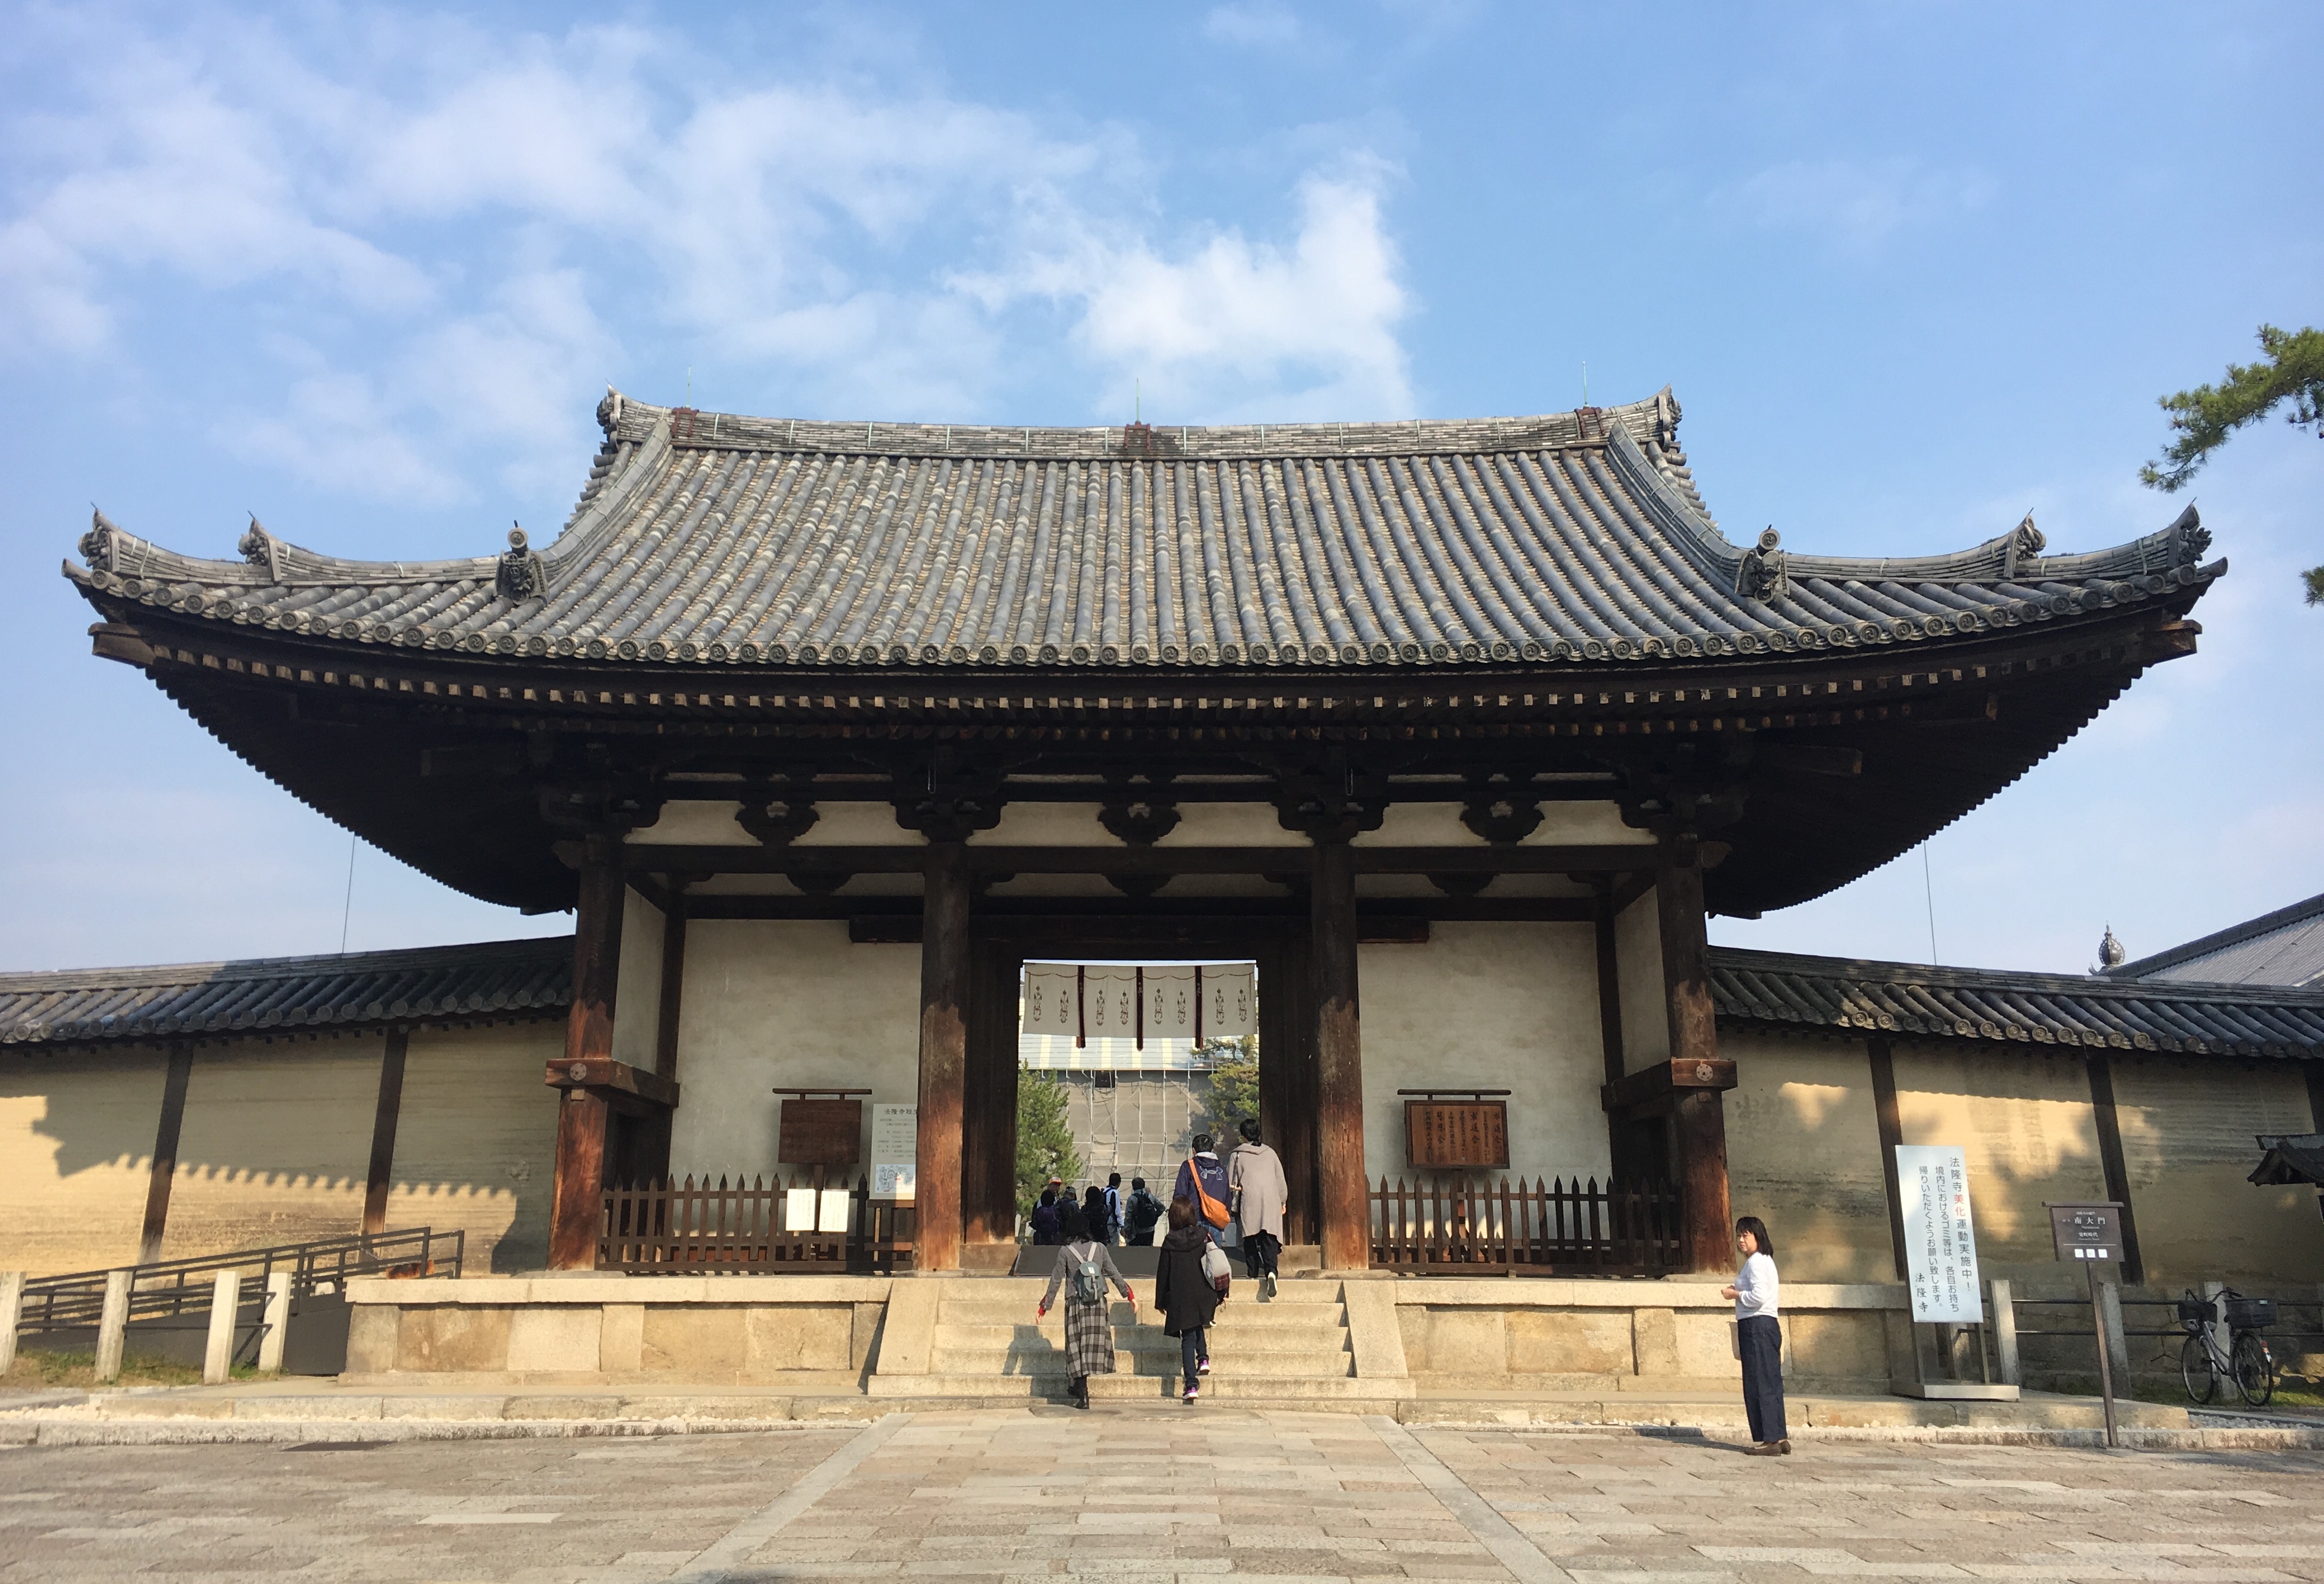 Entrance to Horyu-ji Temple in Nara Japan